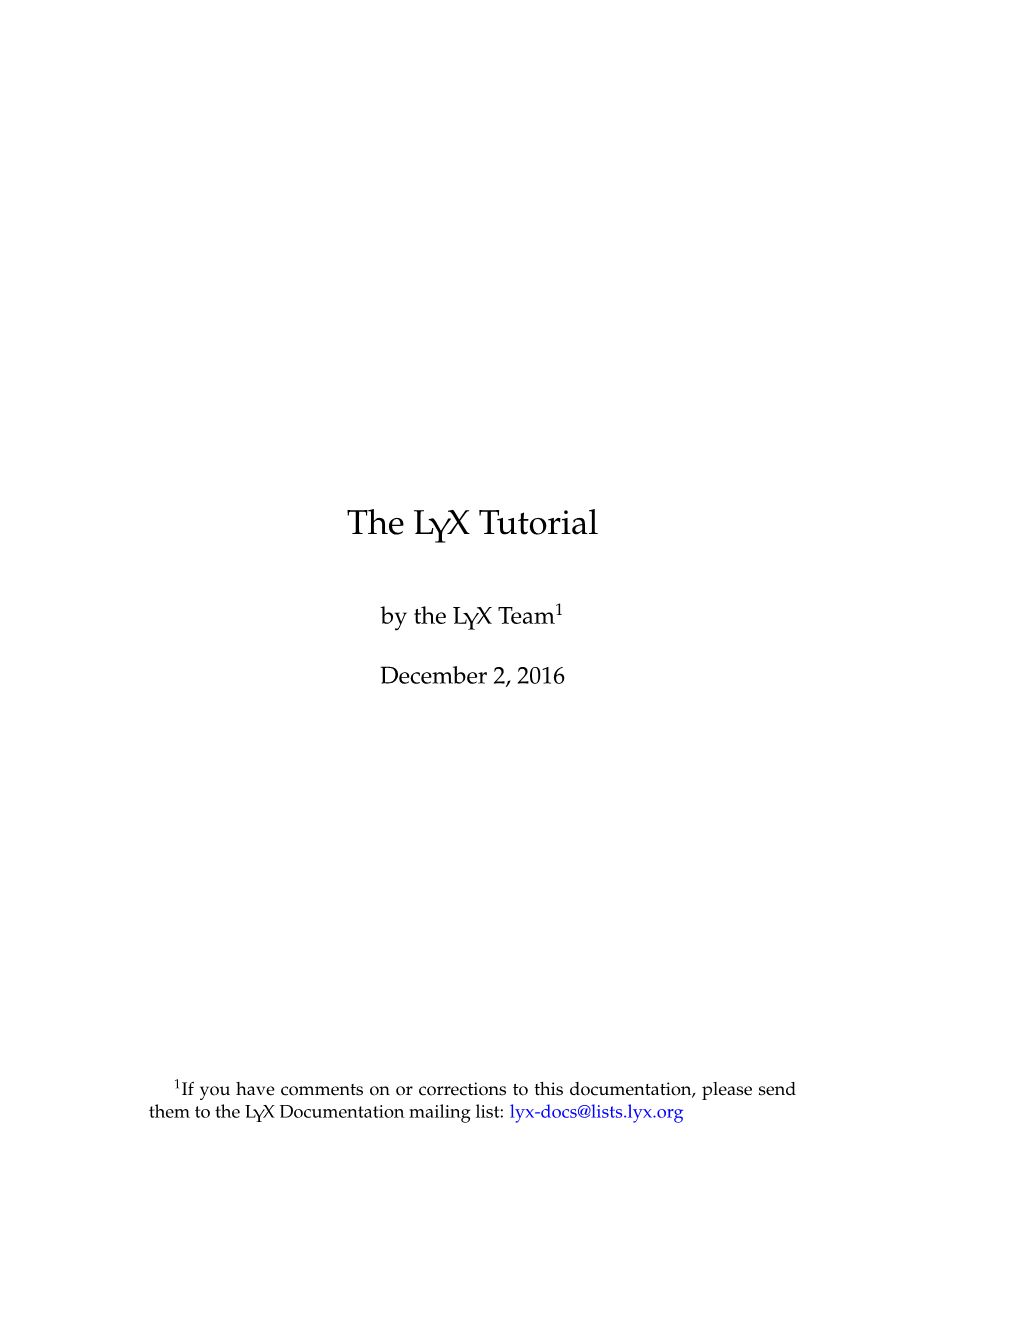 The LYX Tutorial